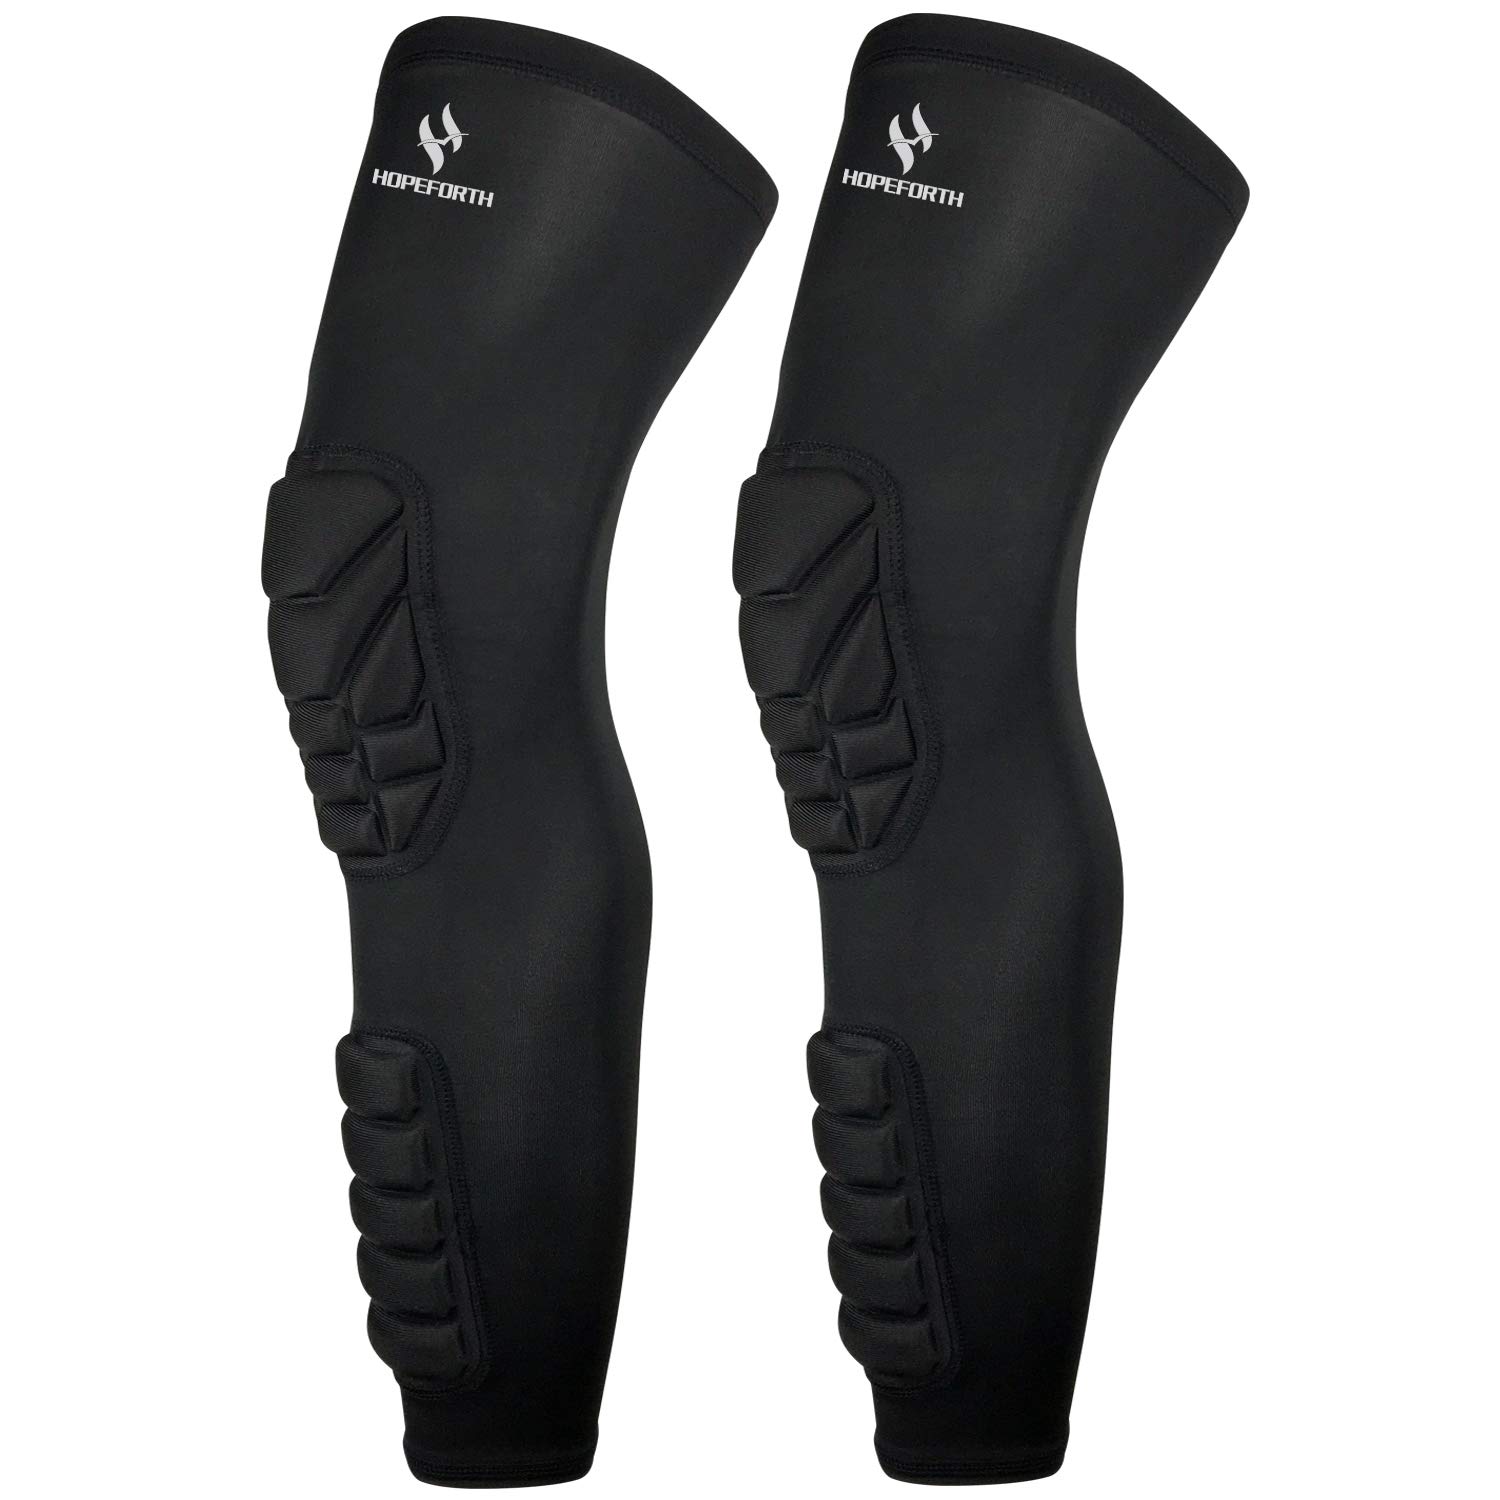 Anti UV Reflective Compression Sport Calf Sleeves (Black, Medium) :  : Health & Personal Care